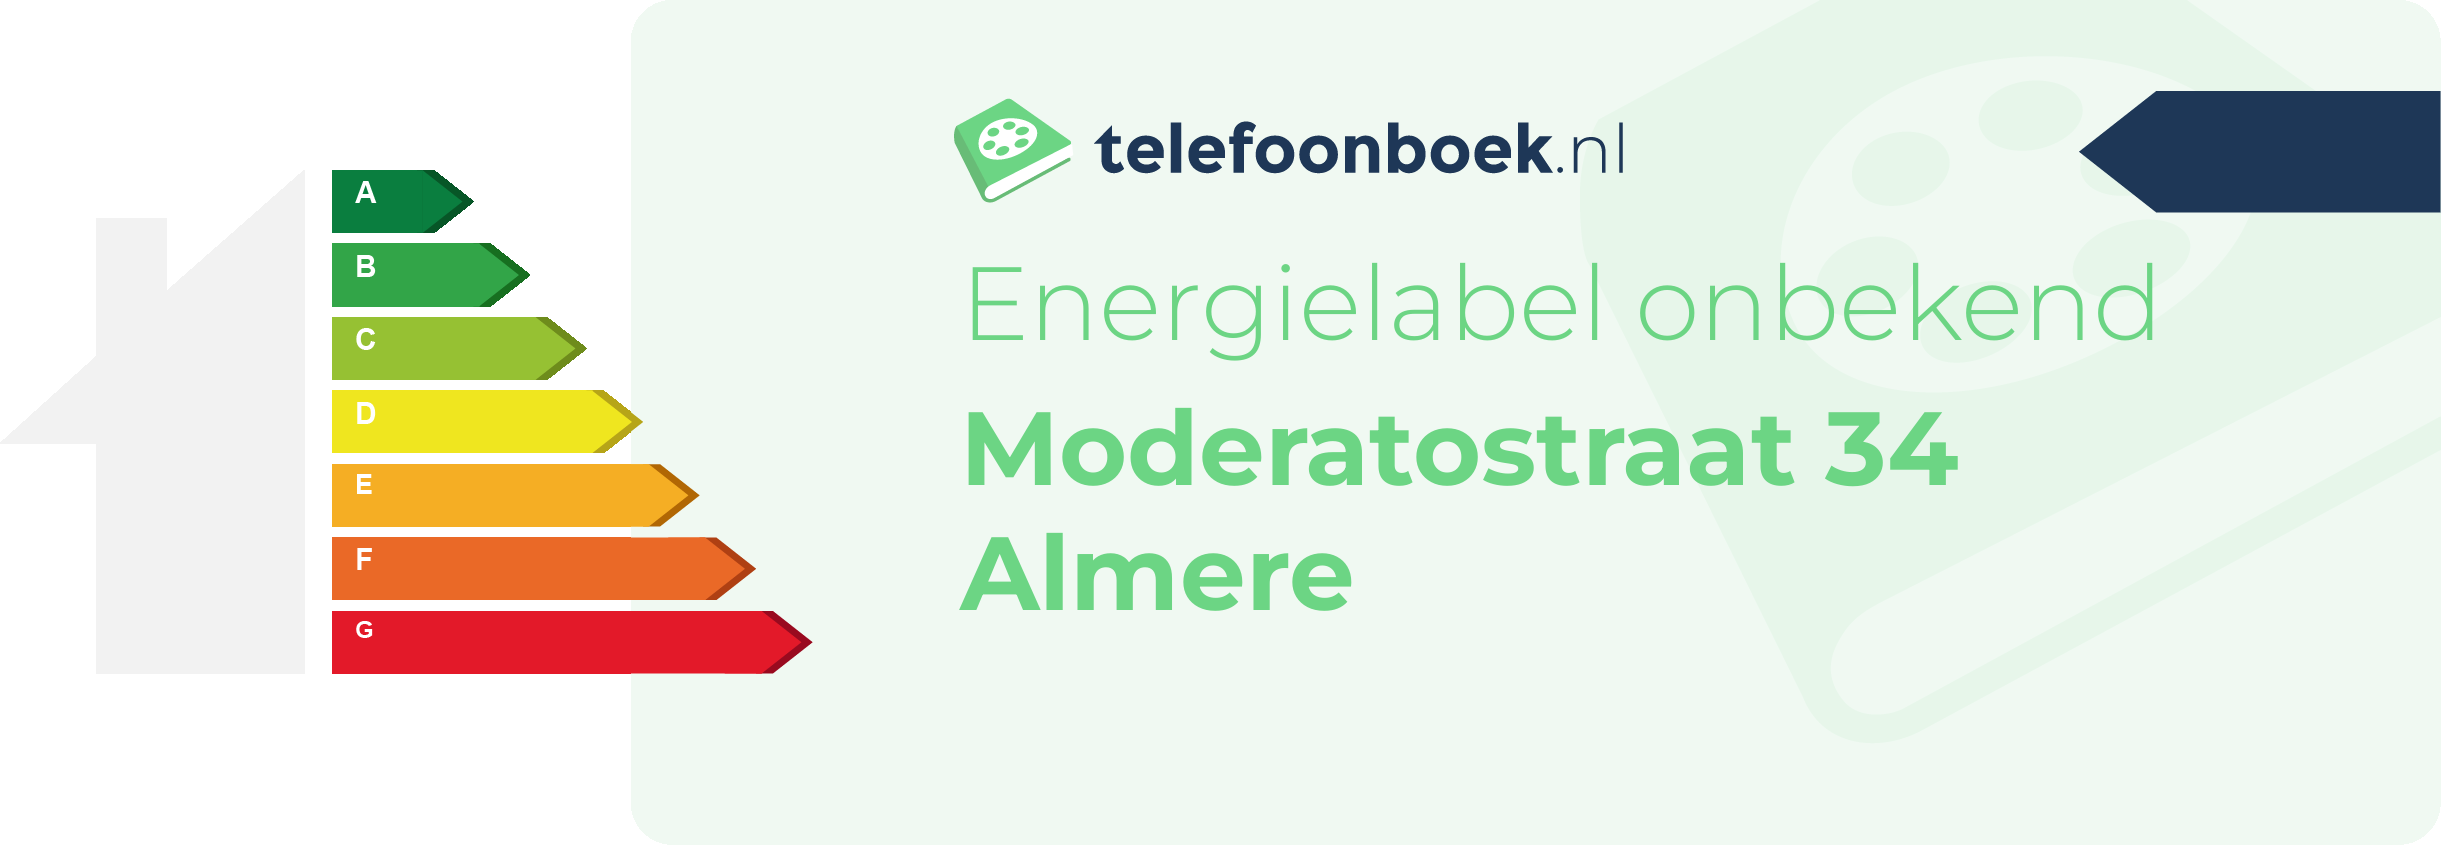 Energielabel Moderatostraat 34 Almere